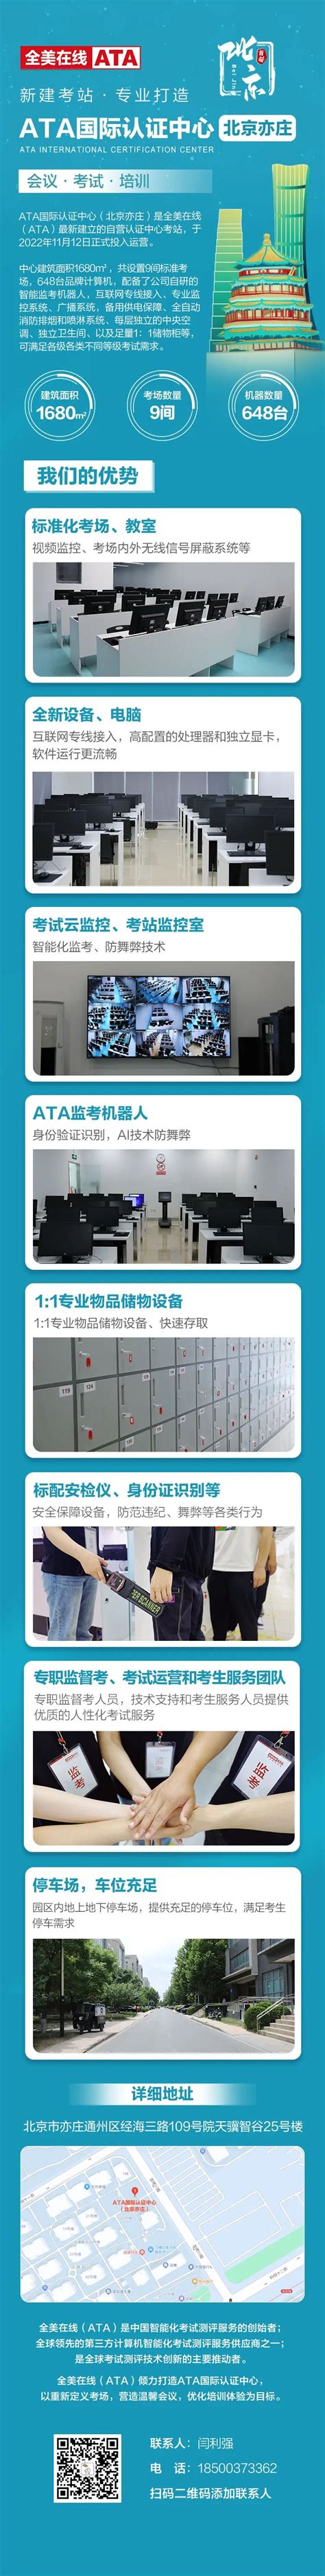 ATA国际认证中心|北京科技大学经济管理学院-丫空间